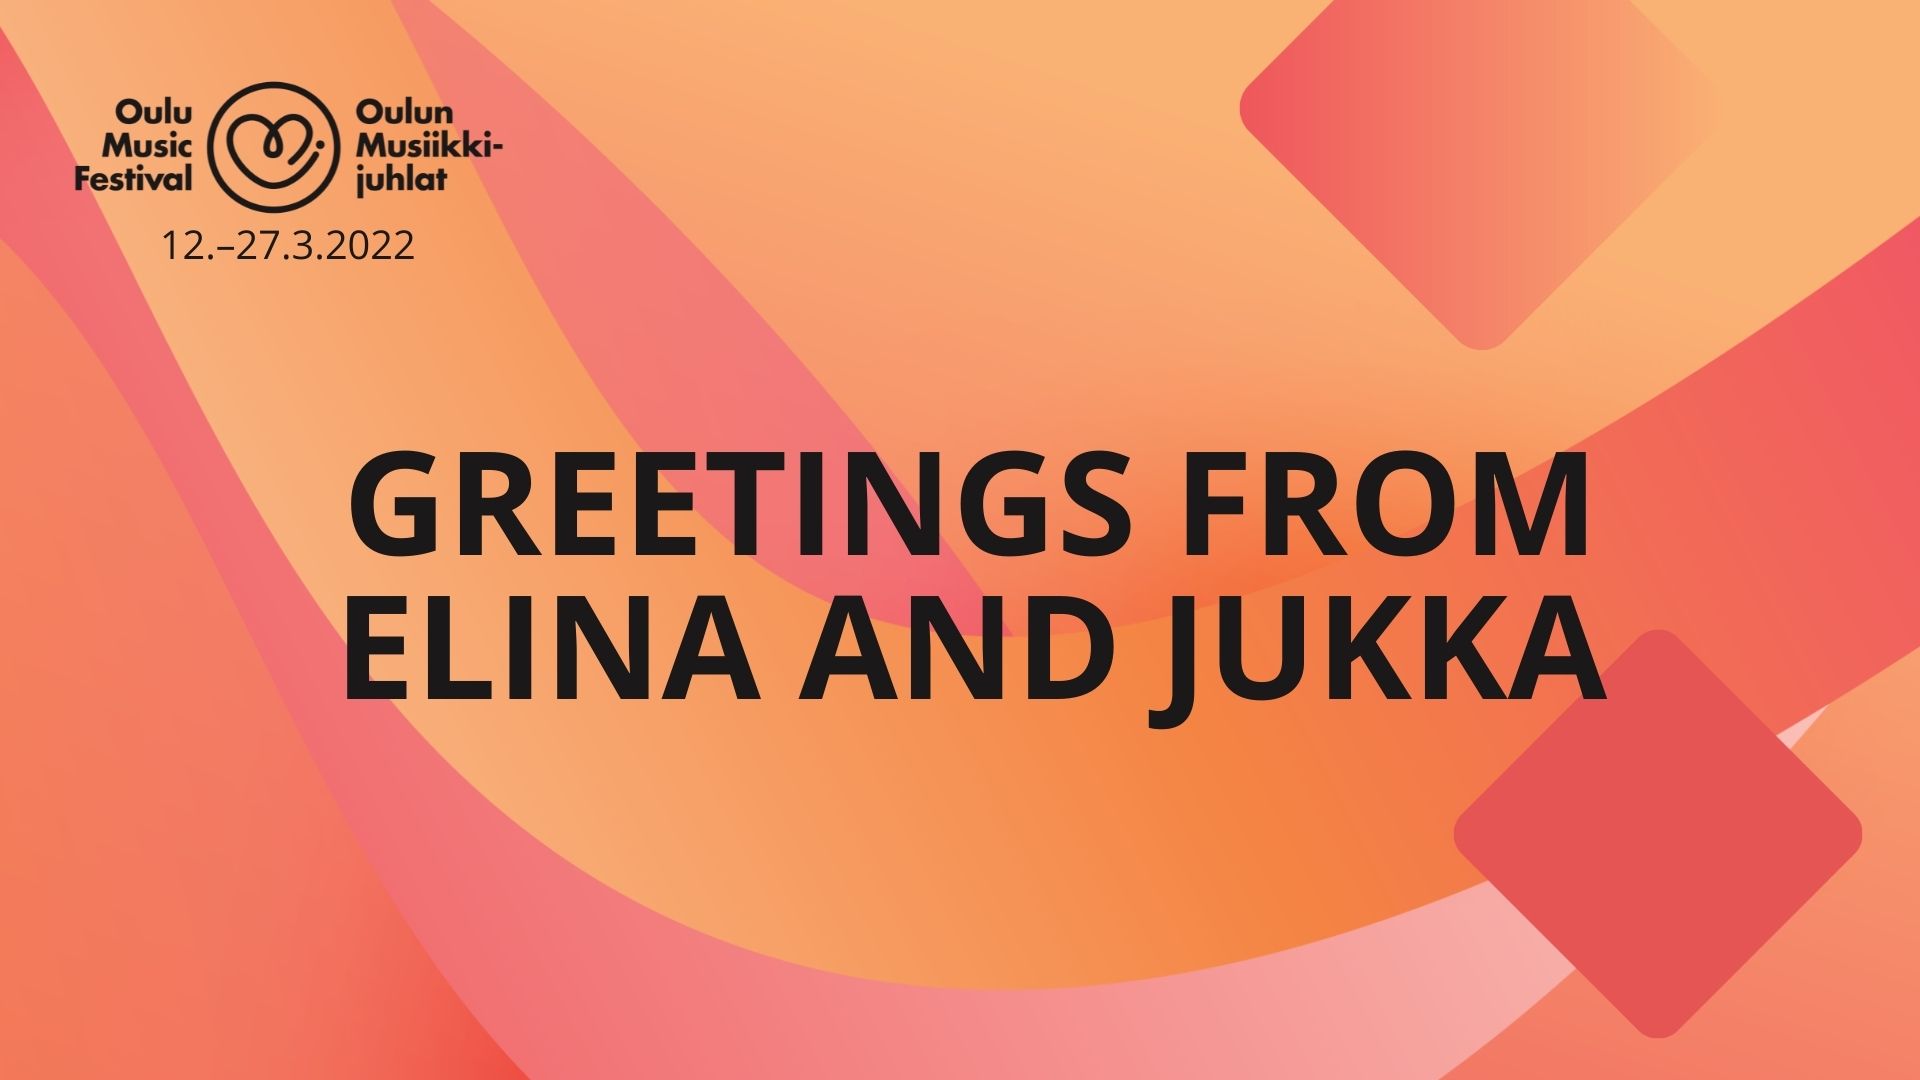 Greetings from Elina and Jukka